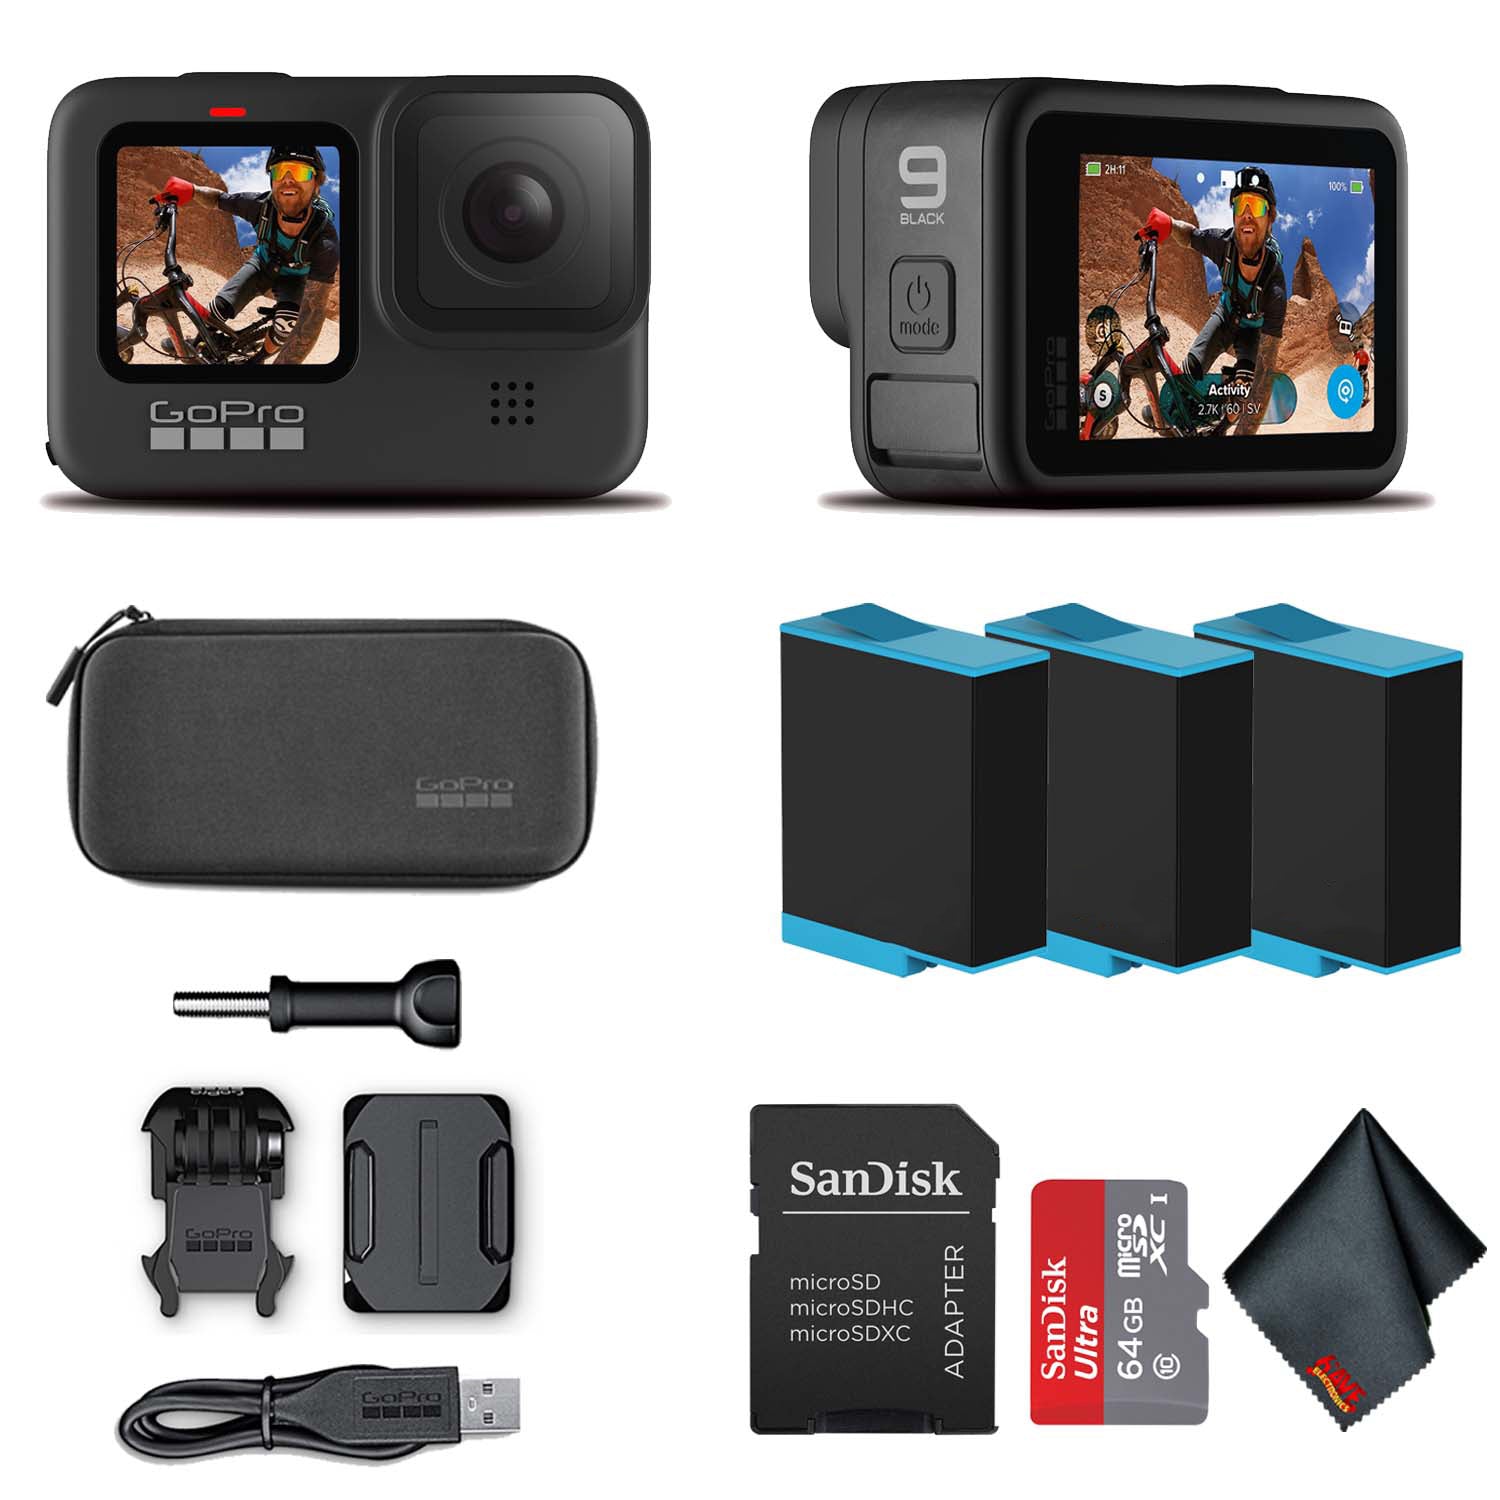 GoPro HERO9 Black - Waterproof Action Camera + 64GB Card and 2 Extra HERO9 Batteries